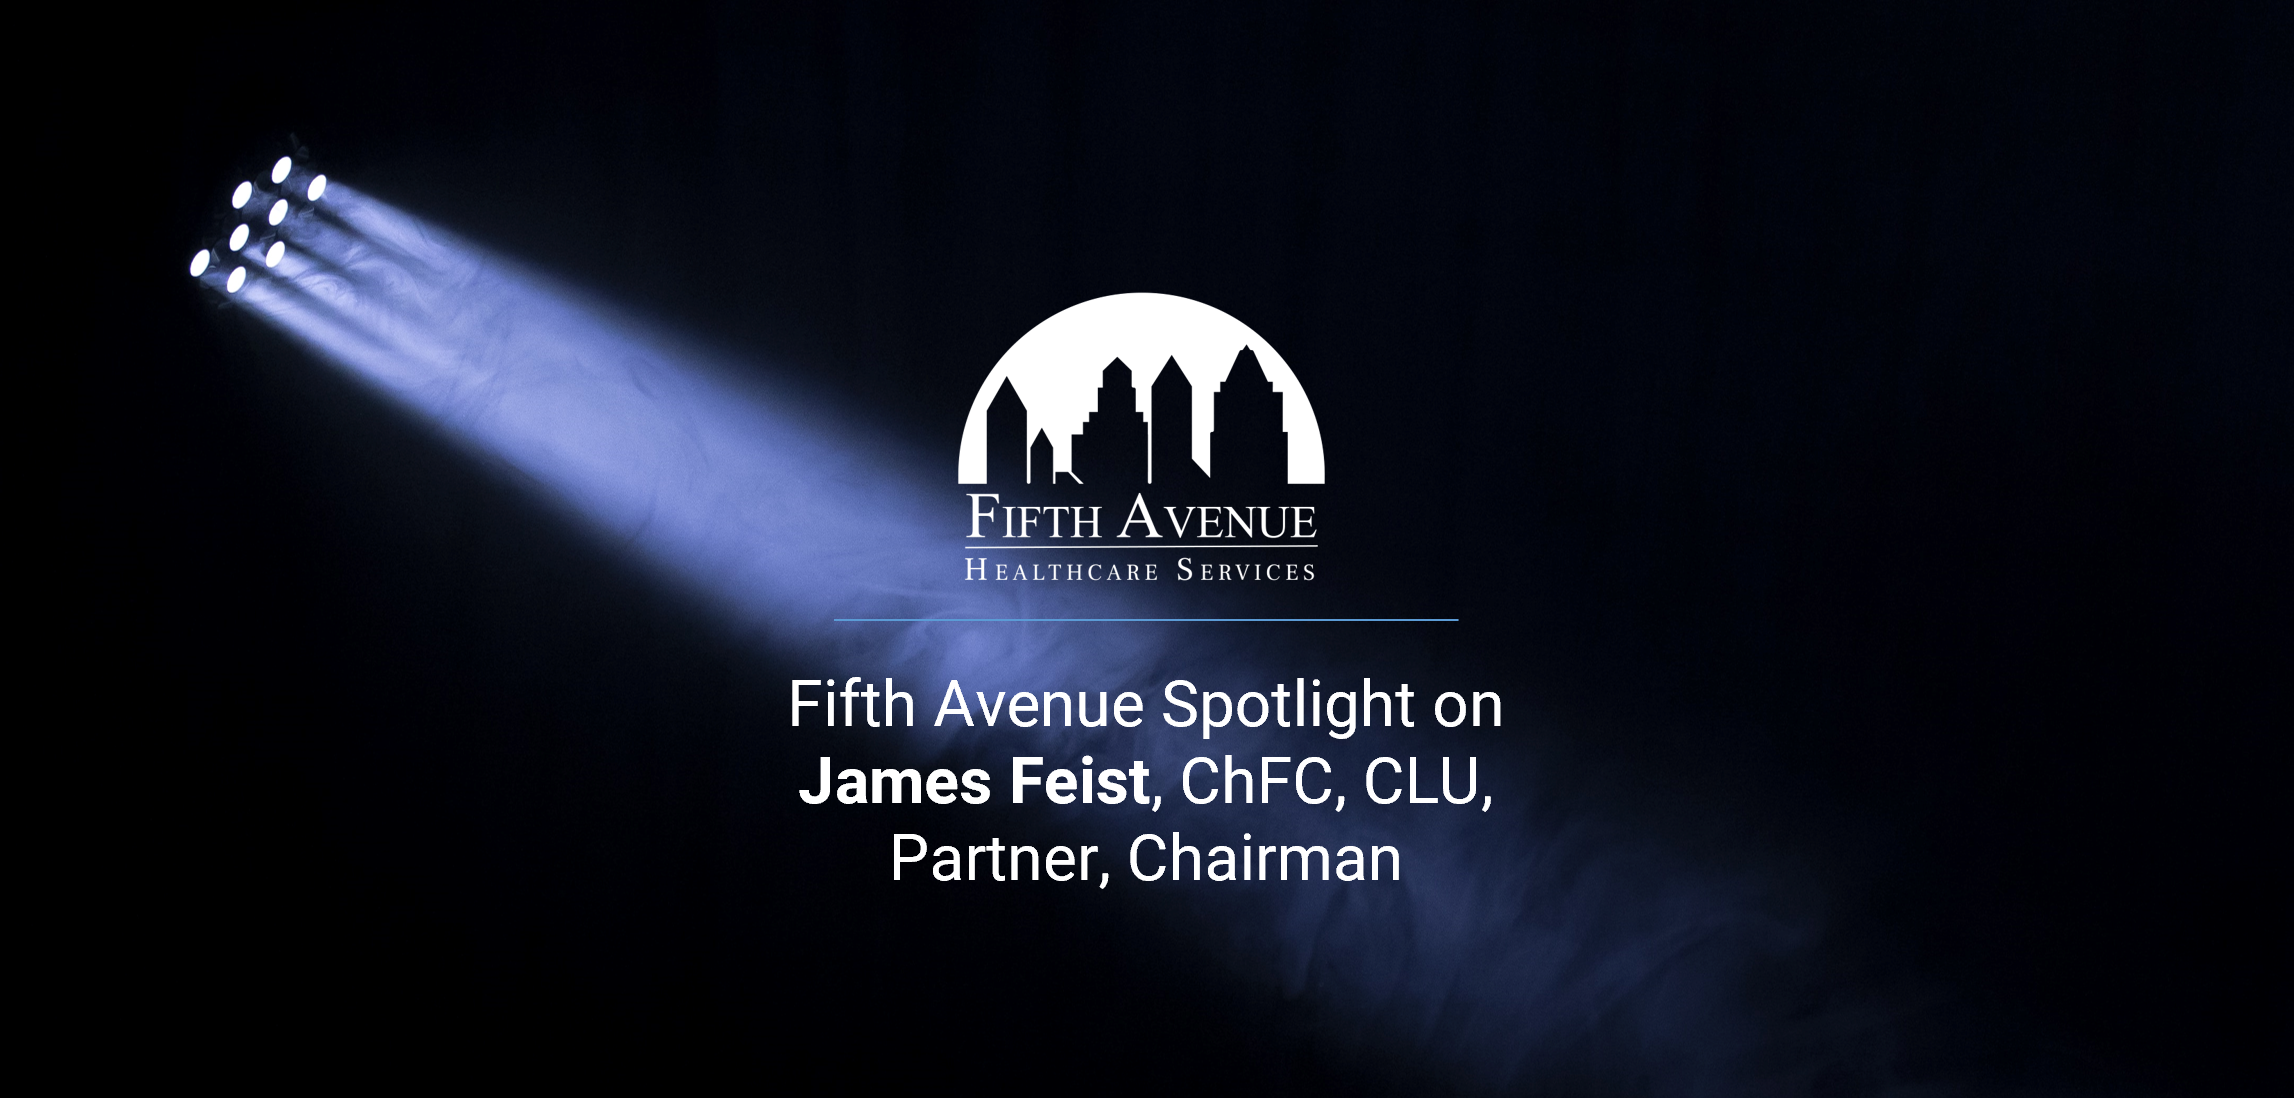 FifthAvenueHealthcareServices.com Fifth Avenue Spotlight James Feist ChFC, CLU, Chairman